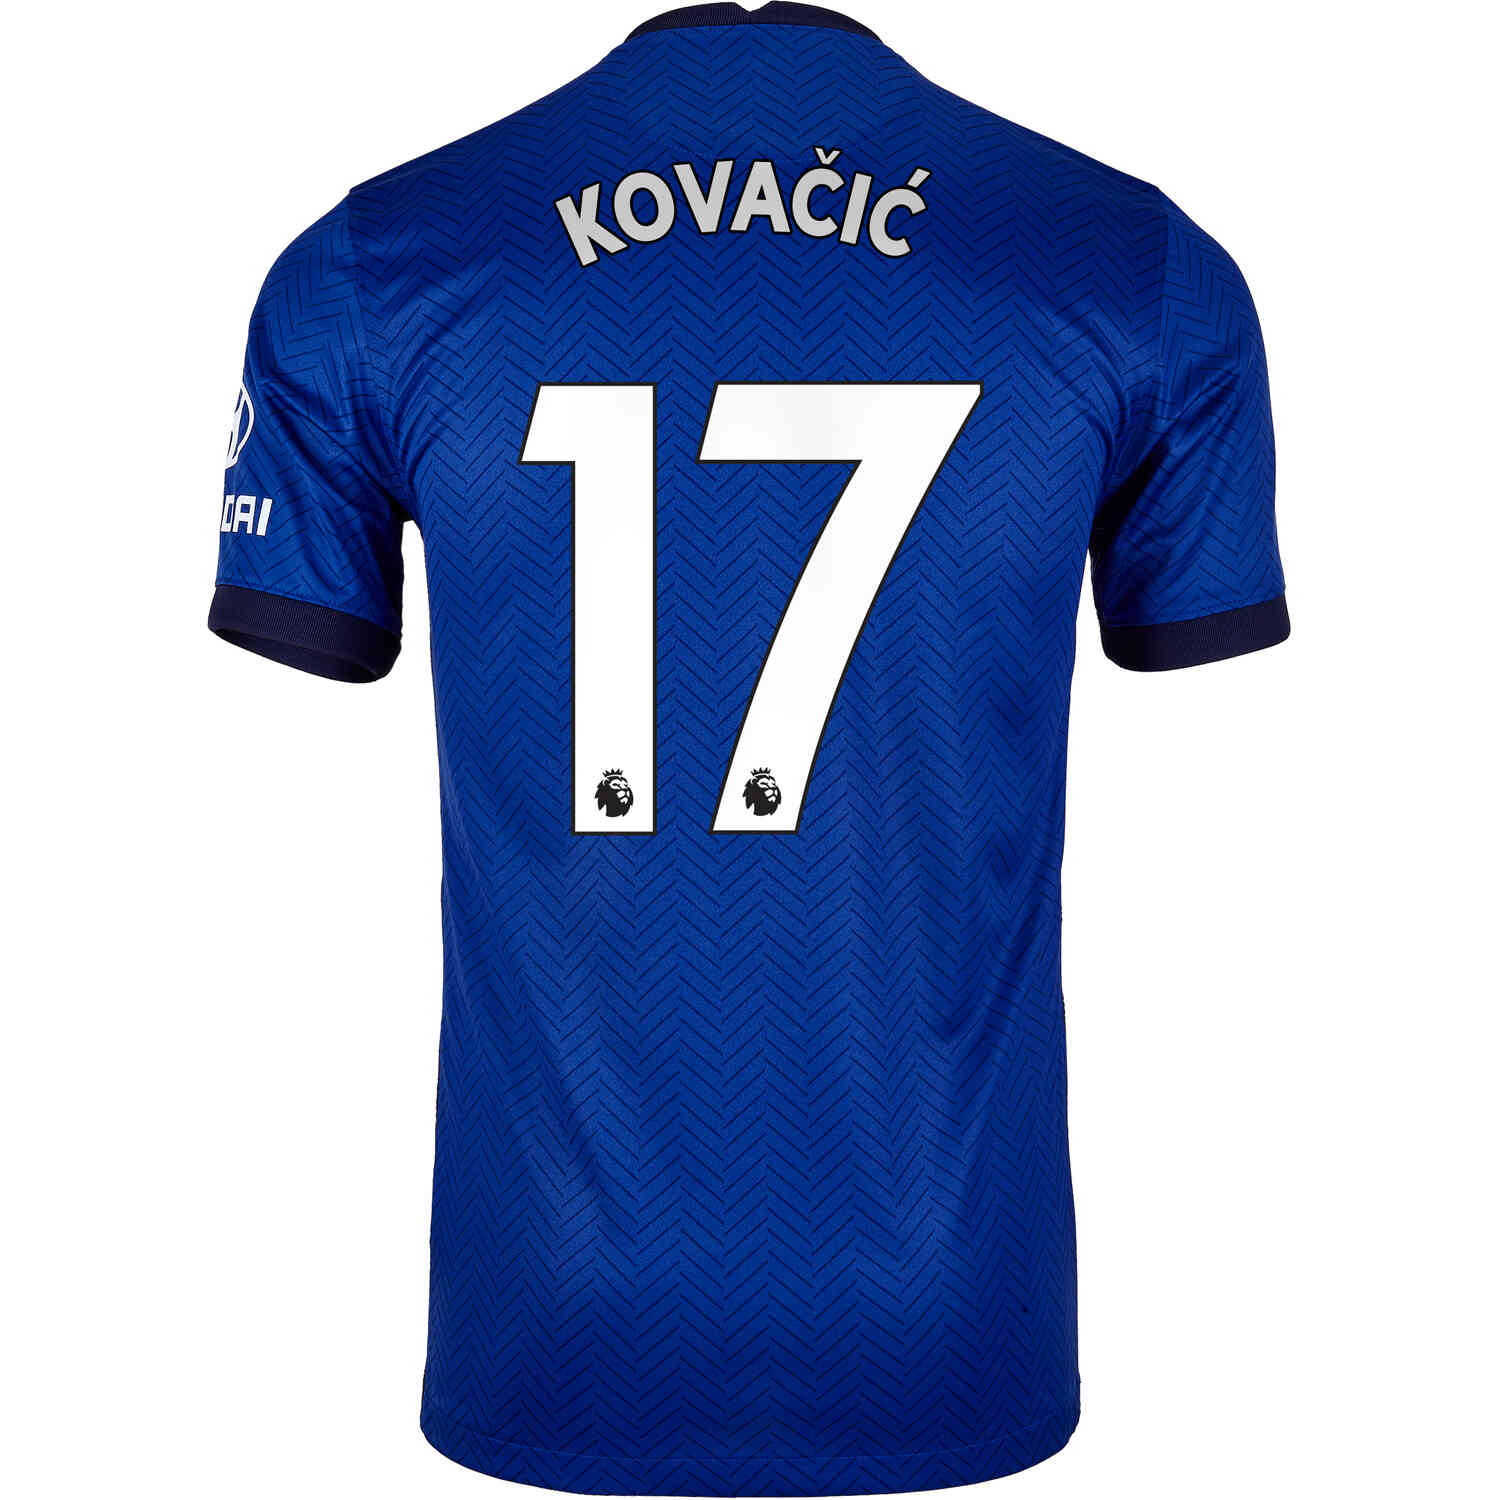 kovacic kit number